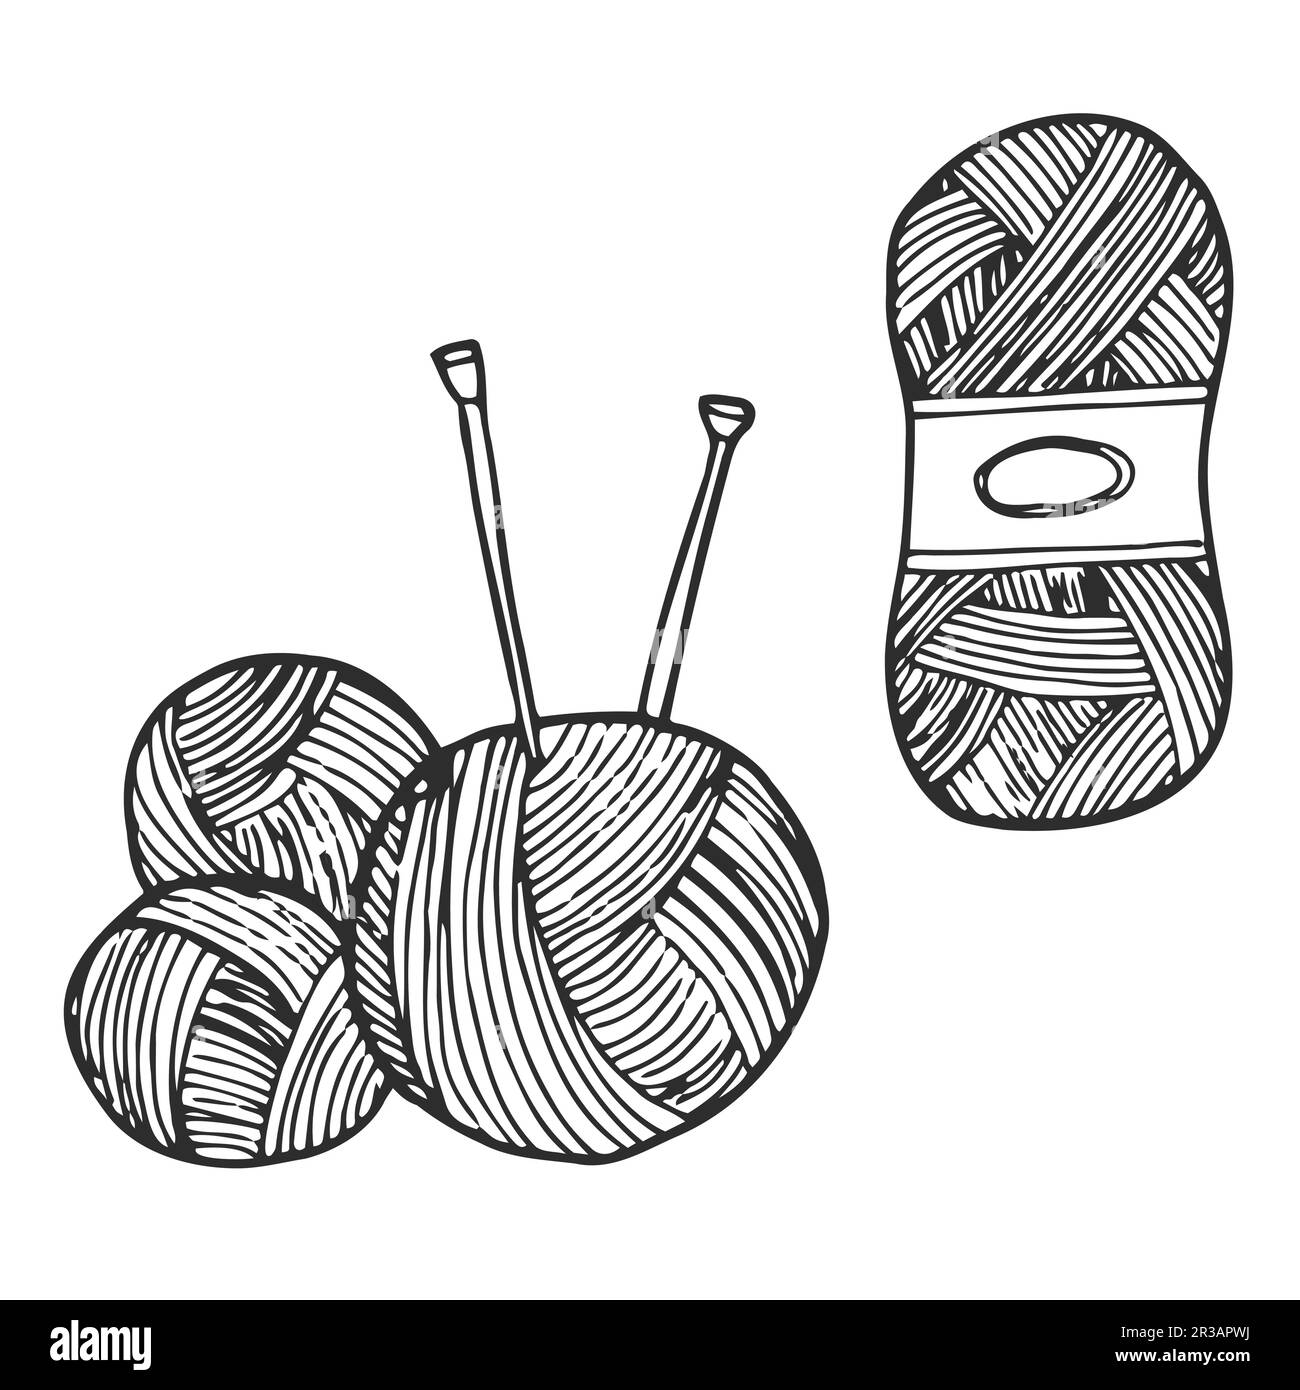 Crochet craft Banque d'images vectorielles - Alamy